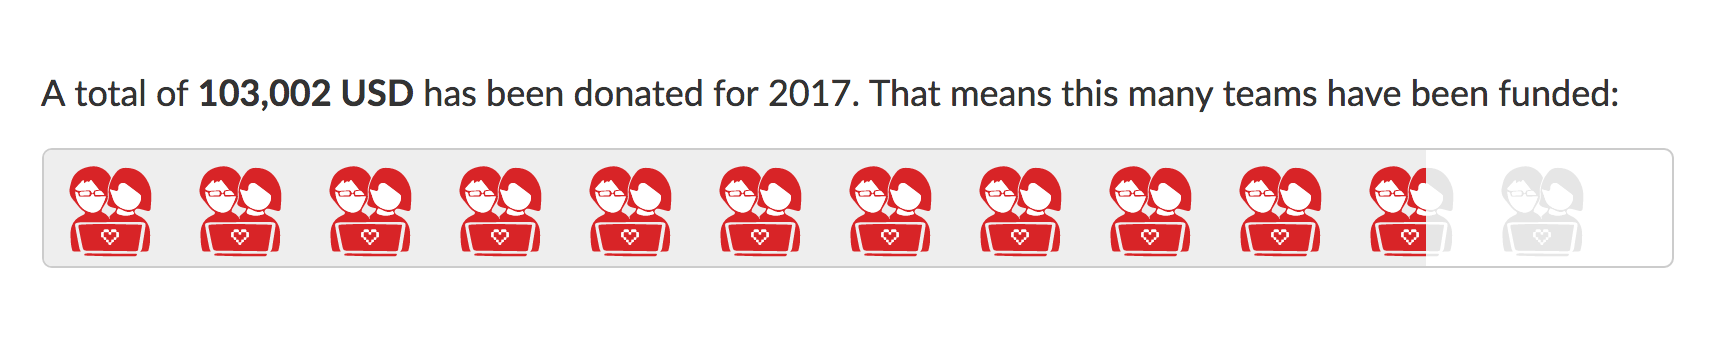 2017 donation progress bar